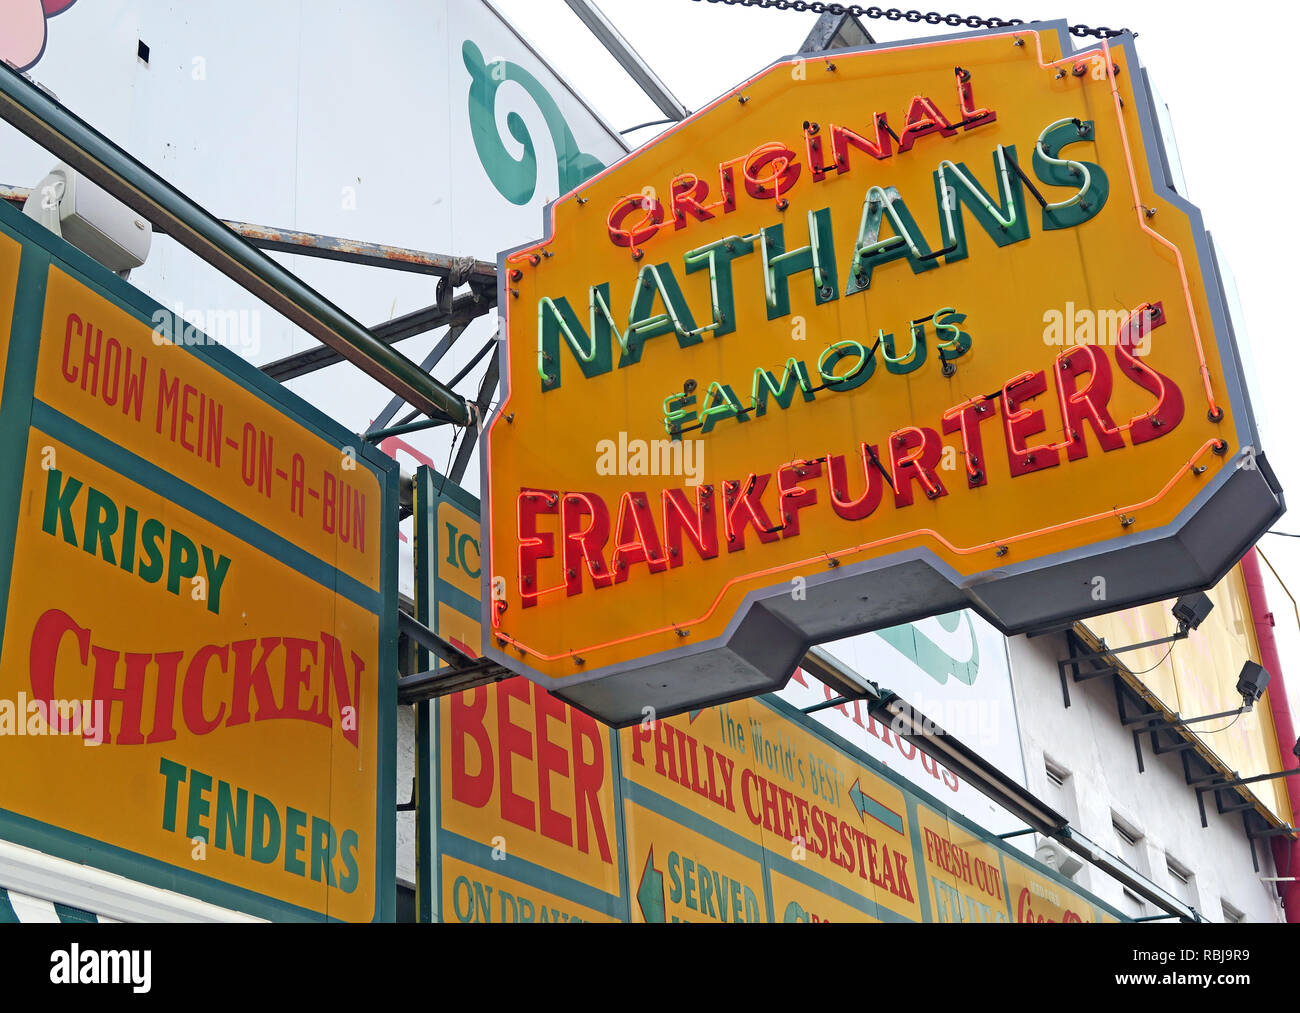 Nathans Handwerker Famous Hotdog Frankfurters Original Restaurant, Deli, Fast Food, Coney Island, Borough of Brooklyn, New York, NY, USA Stock Photo